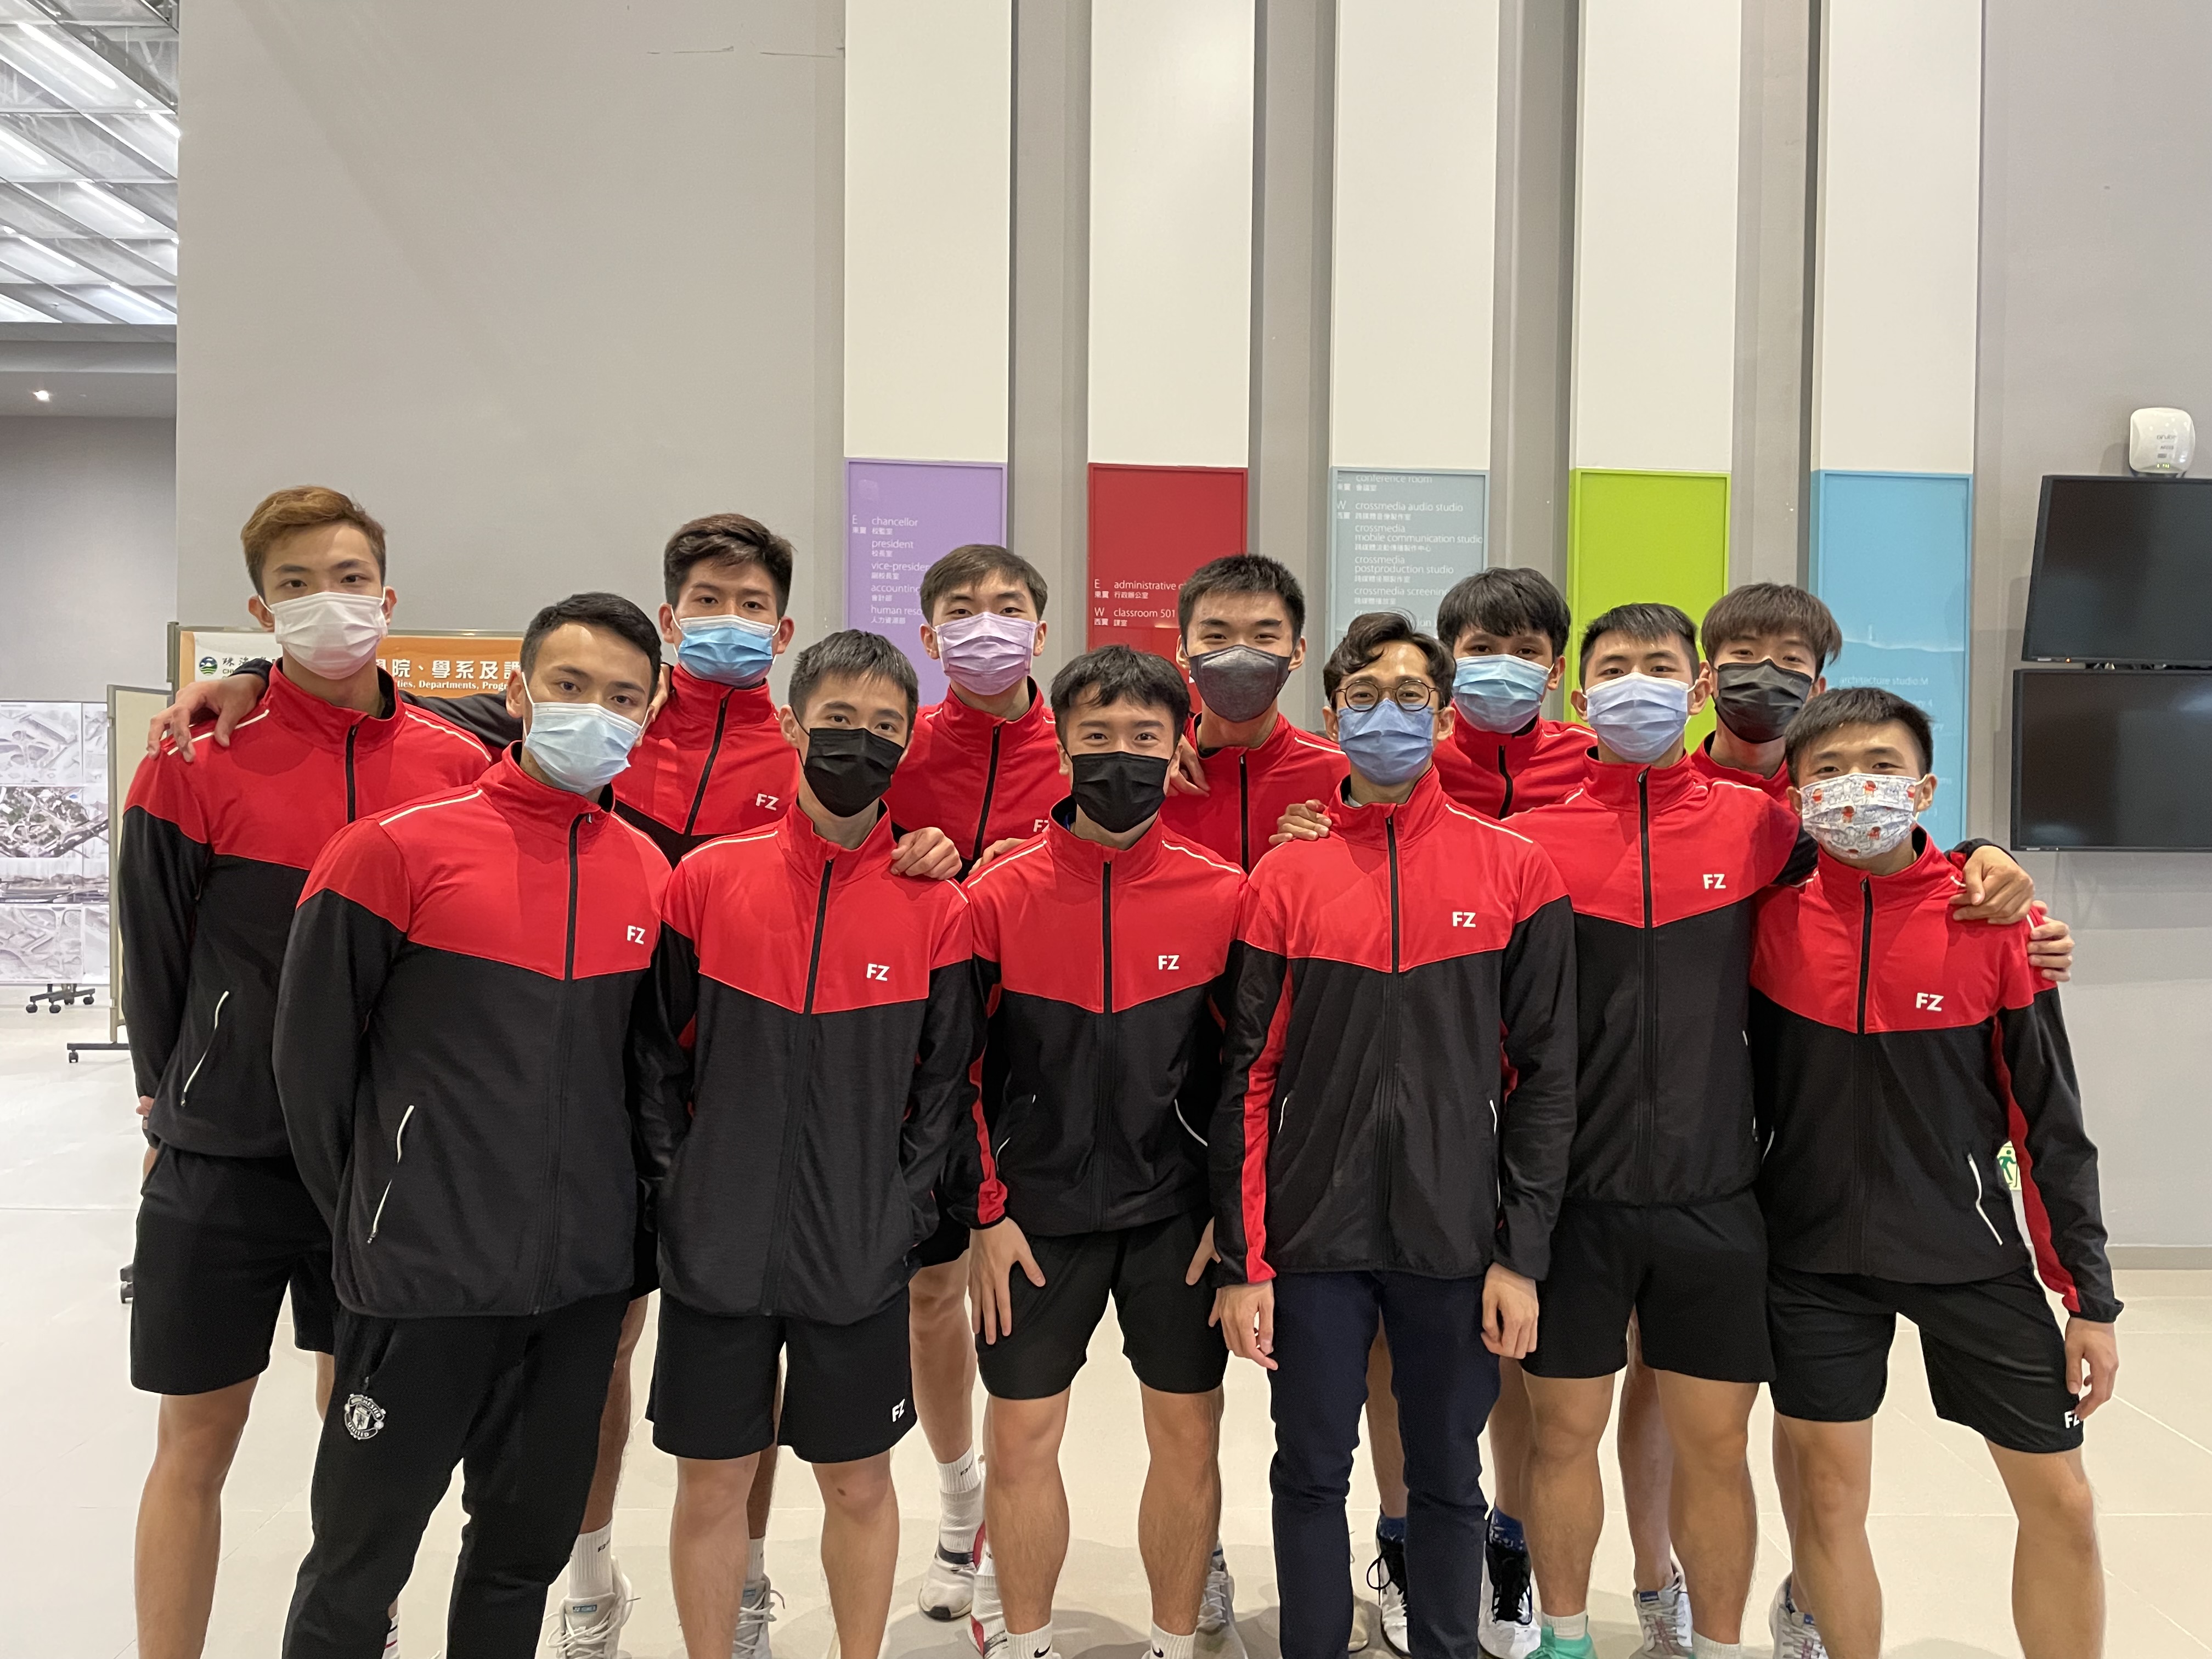 Badminton boys 2019 2020